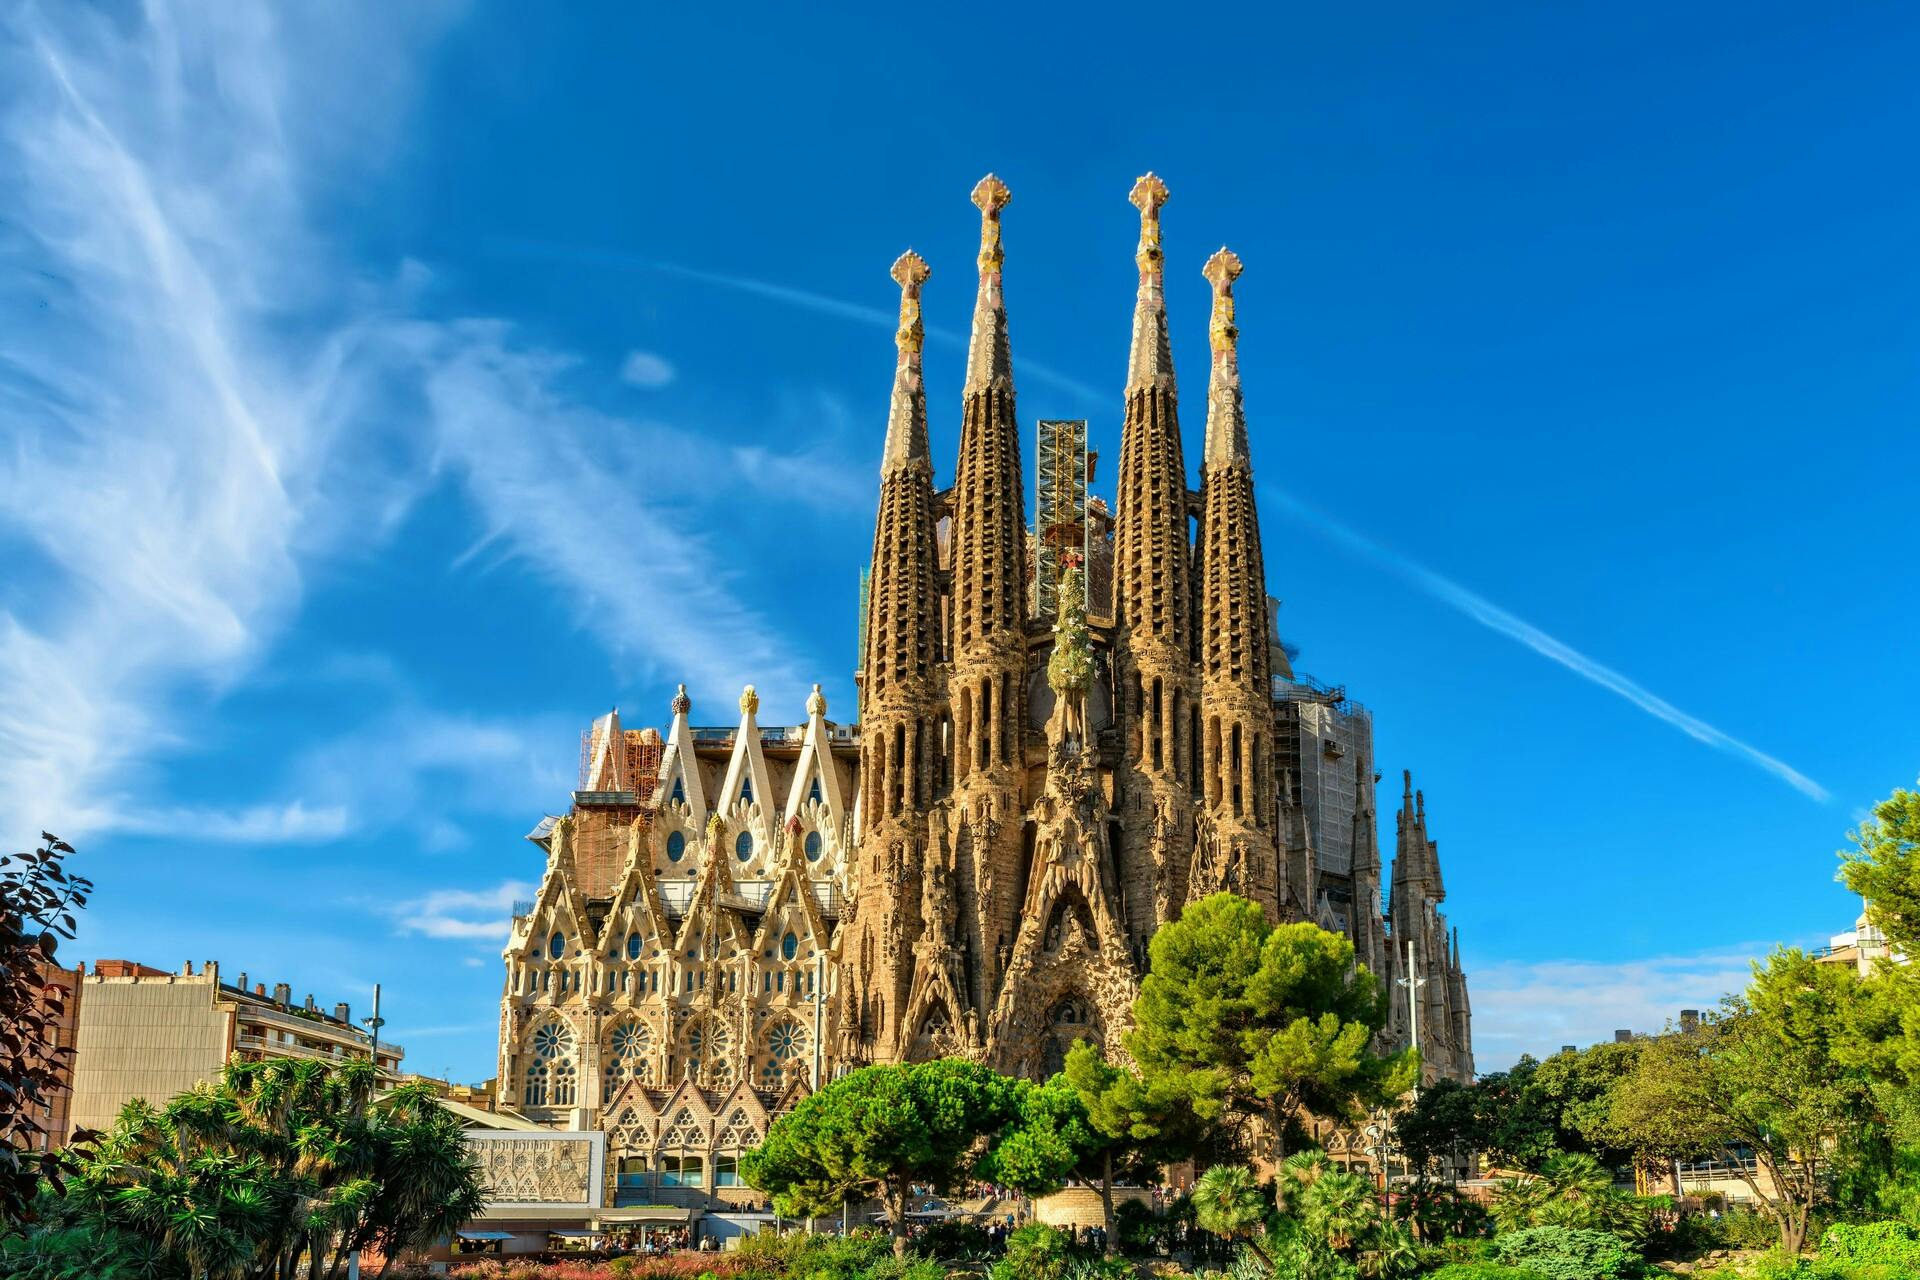 Visite audioguidée de la Sagrada Família